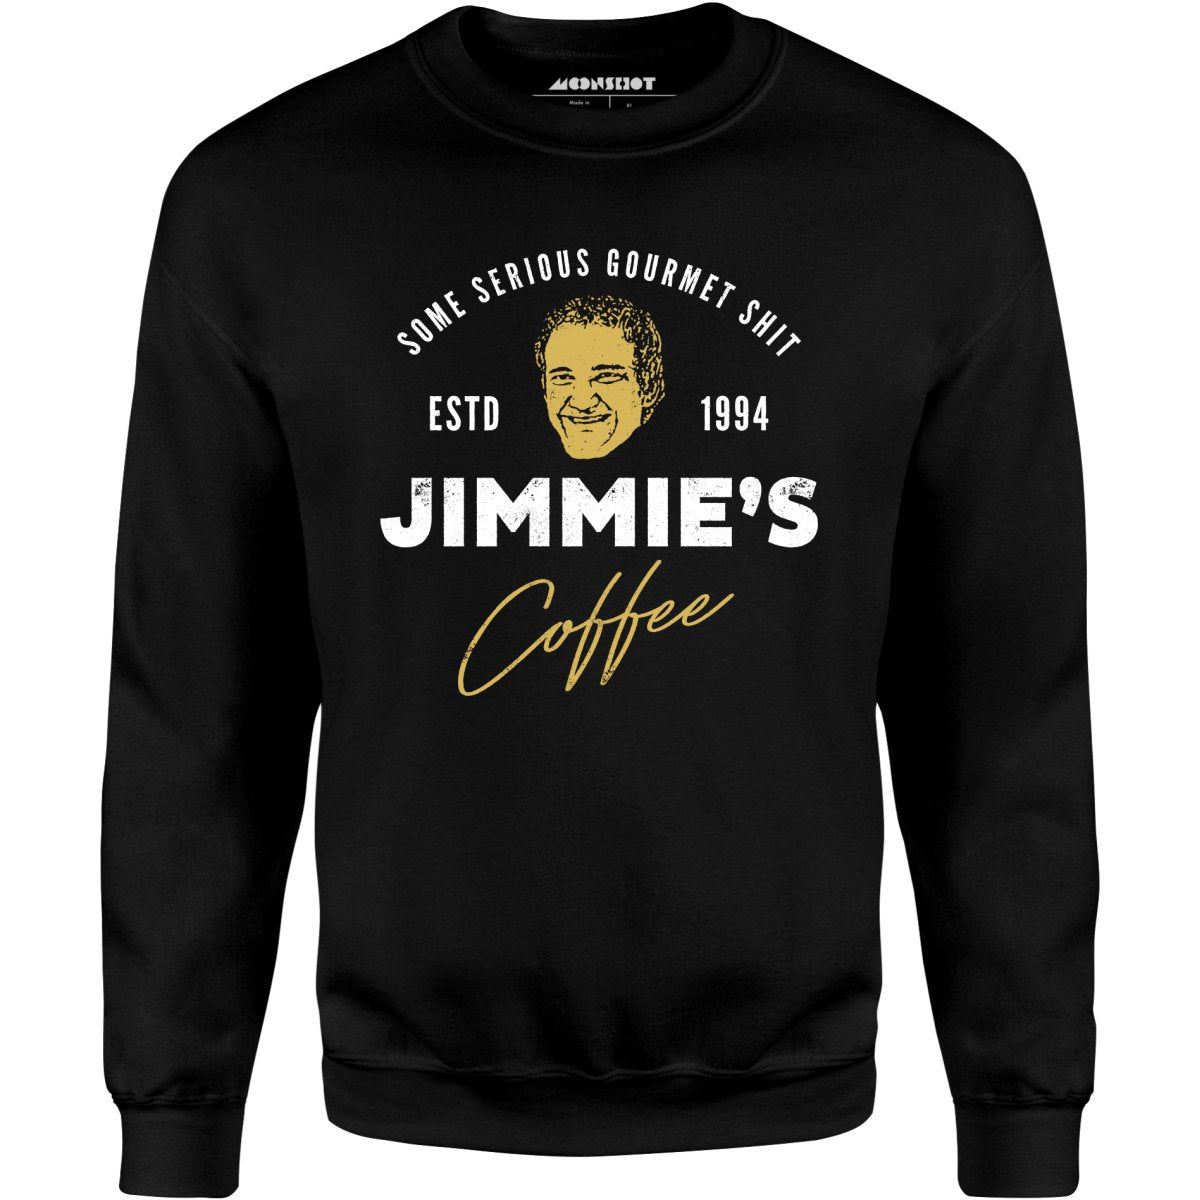 Jimmie's Coffee - Unisex Sweatshirt